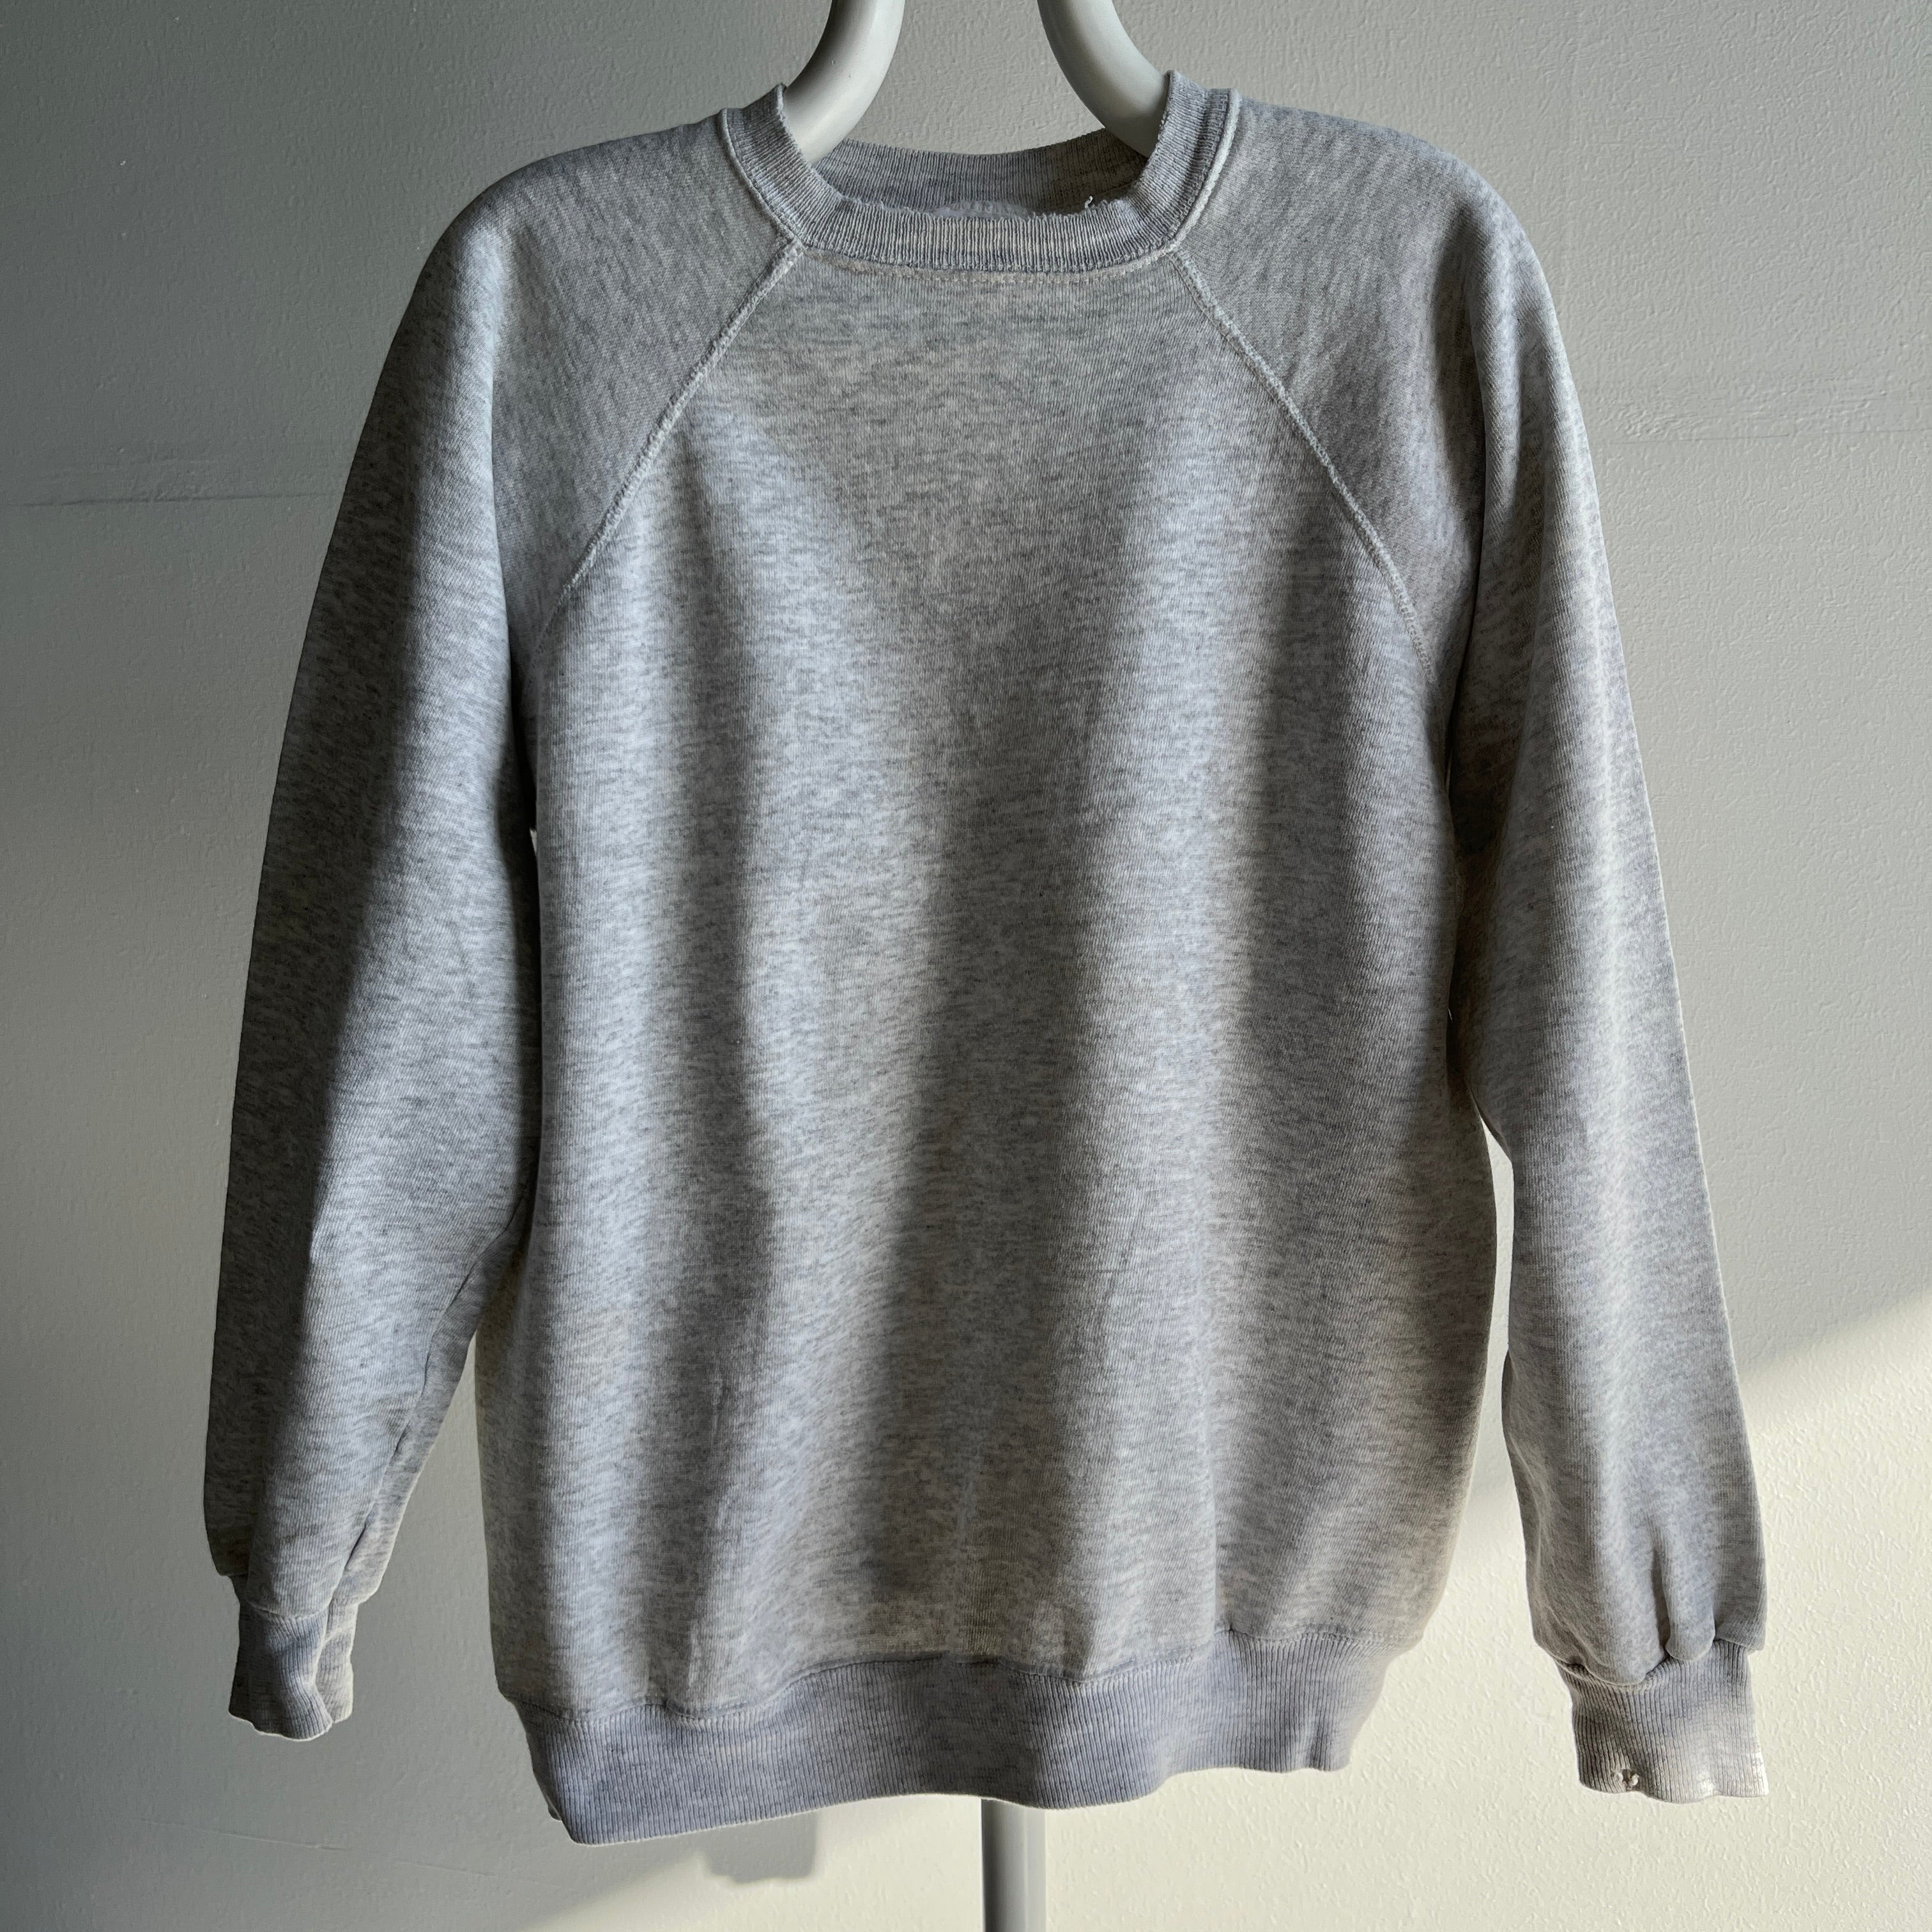 1980/90s Blank Light Gray Sweatshirt with Heavy Staining